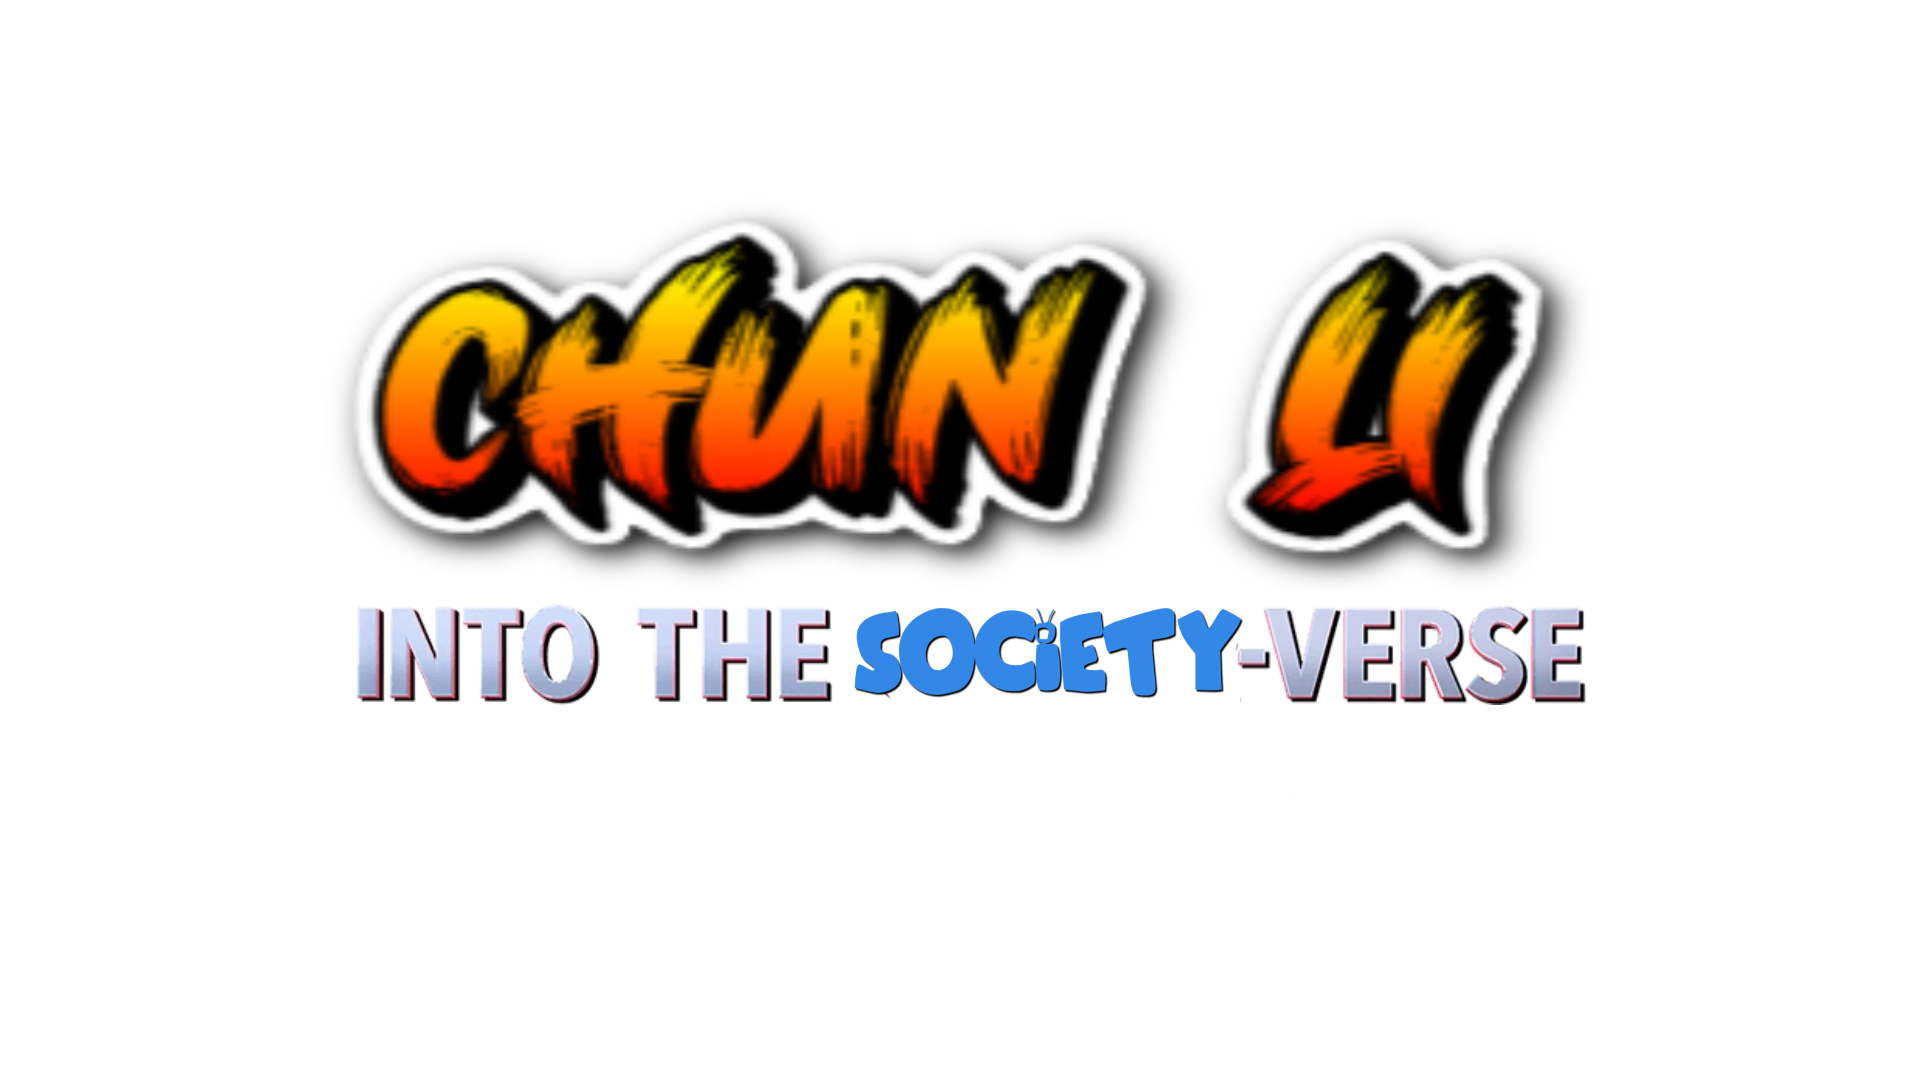 Chun-Li Into the Society-Verse